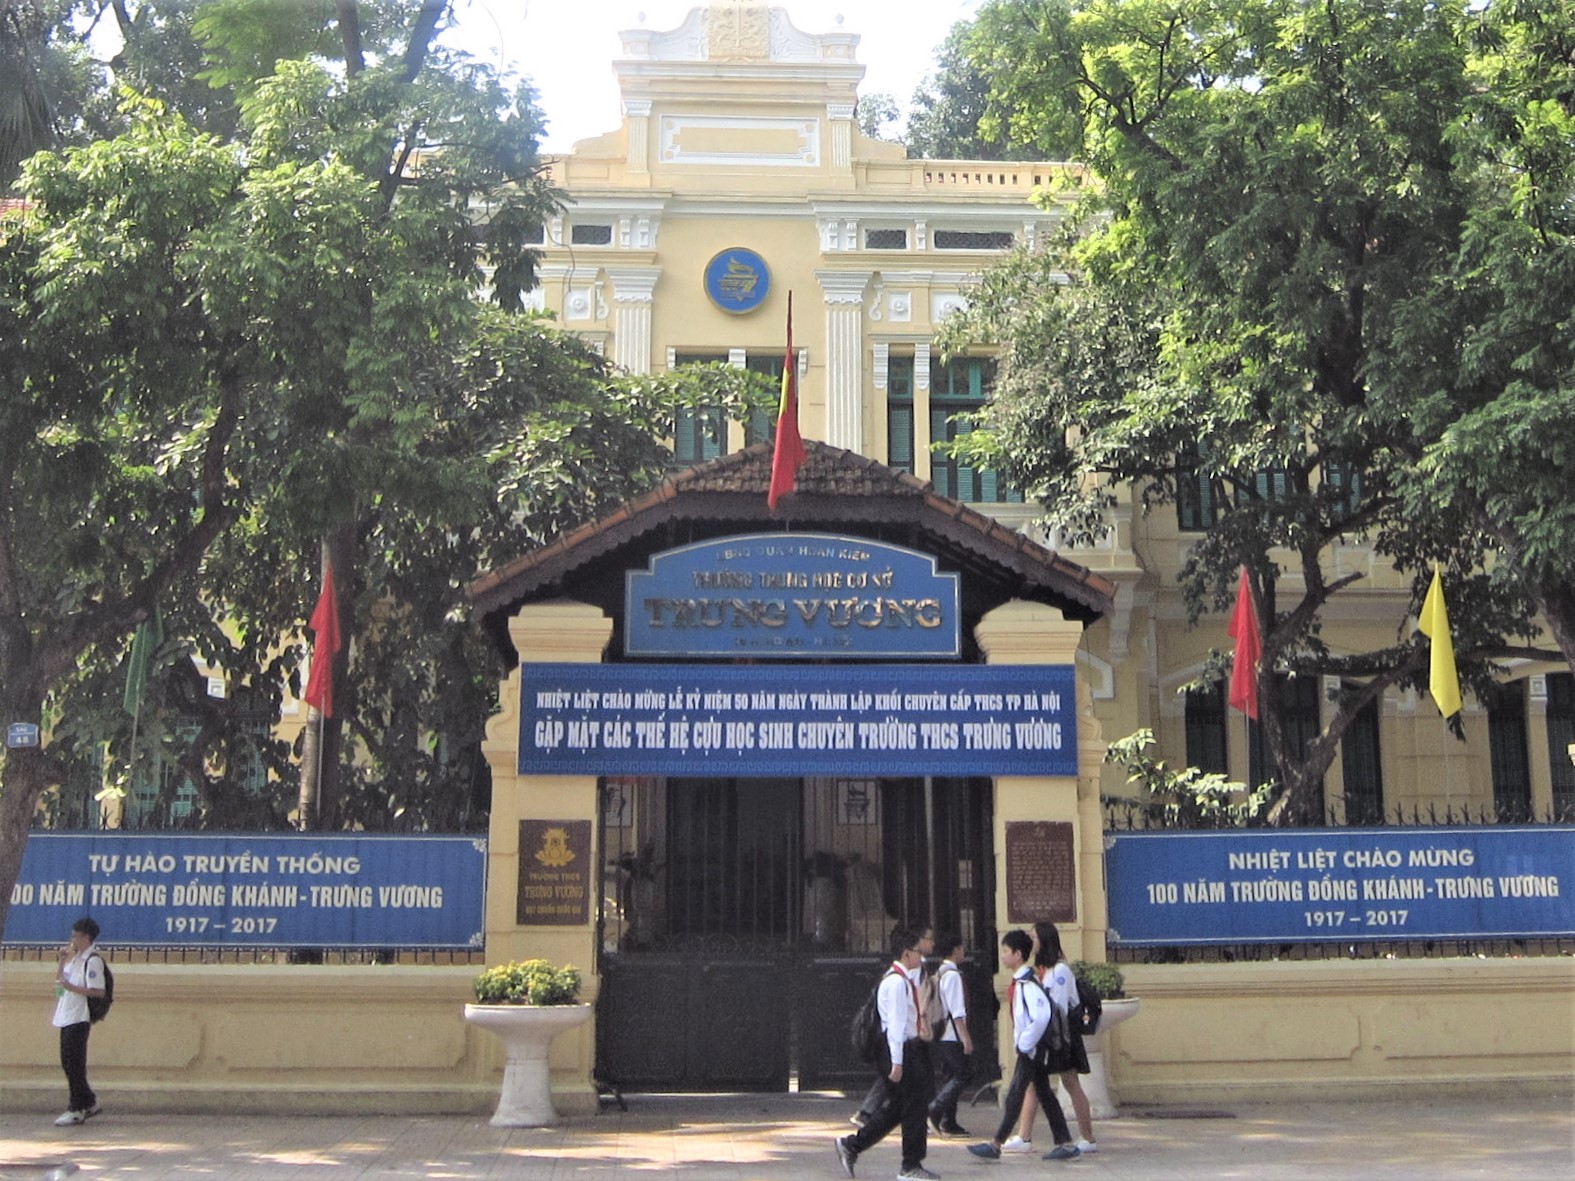 WB:Vietnamese schools achieve significant educational progress